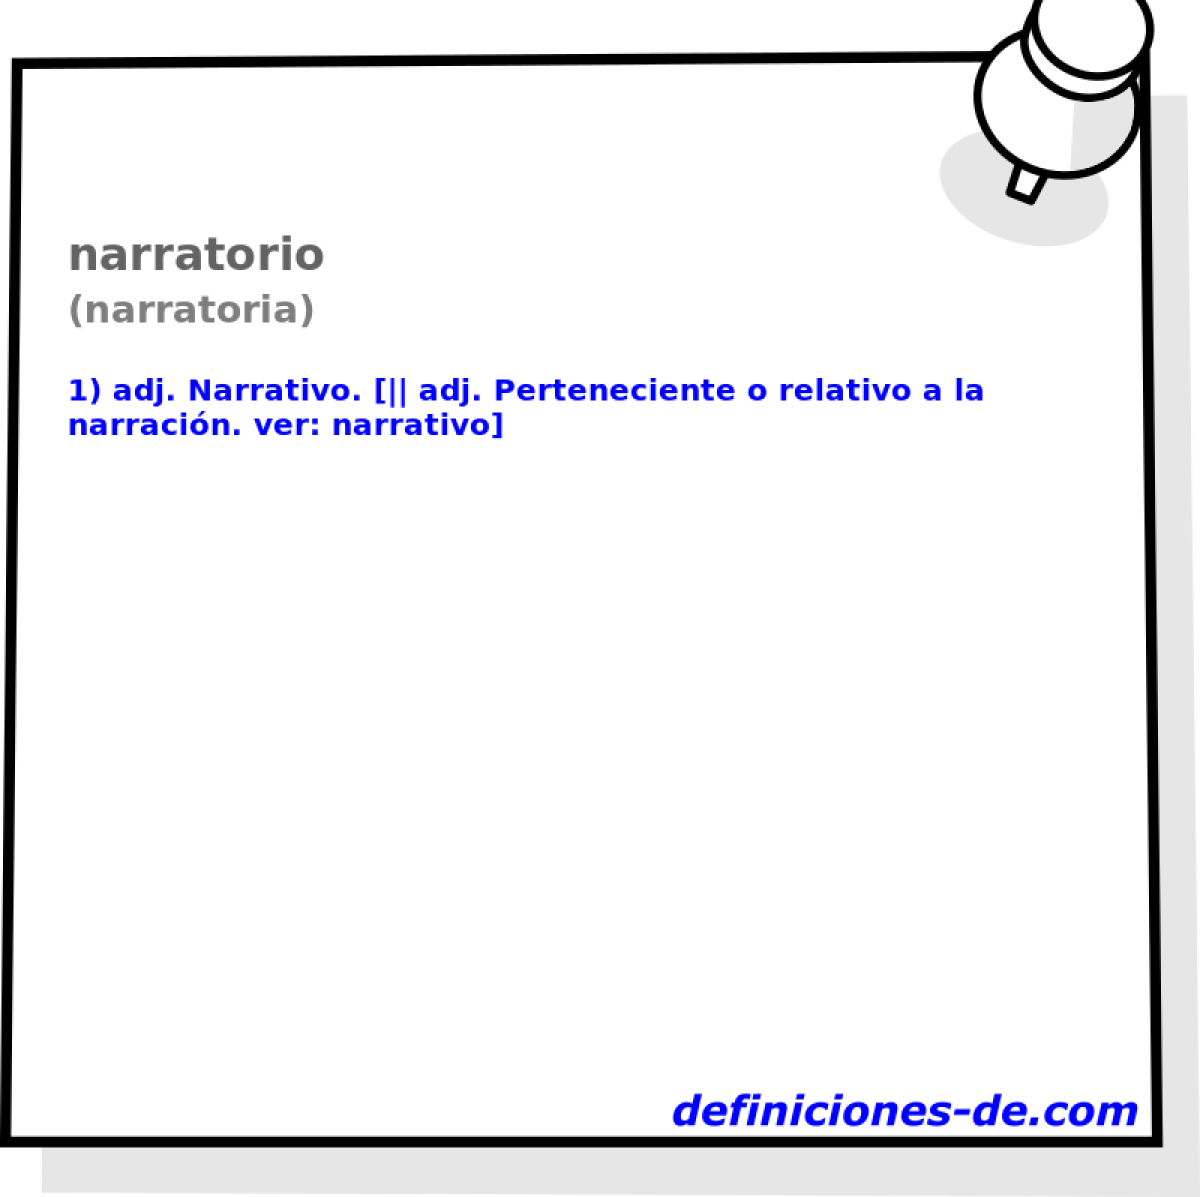 narratorio (narratoria)